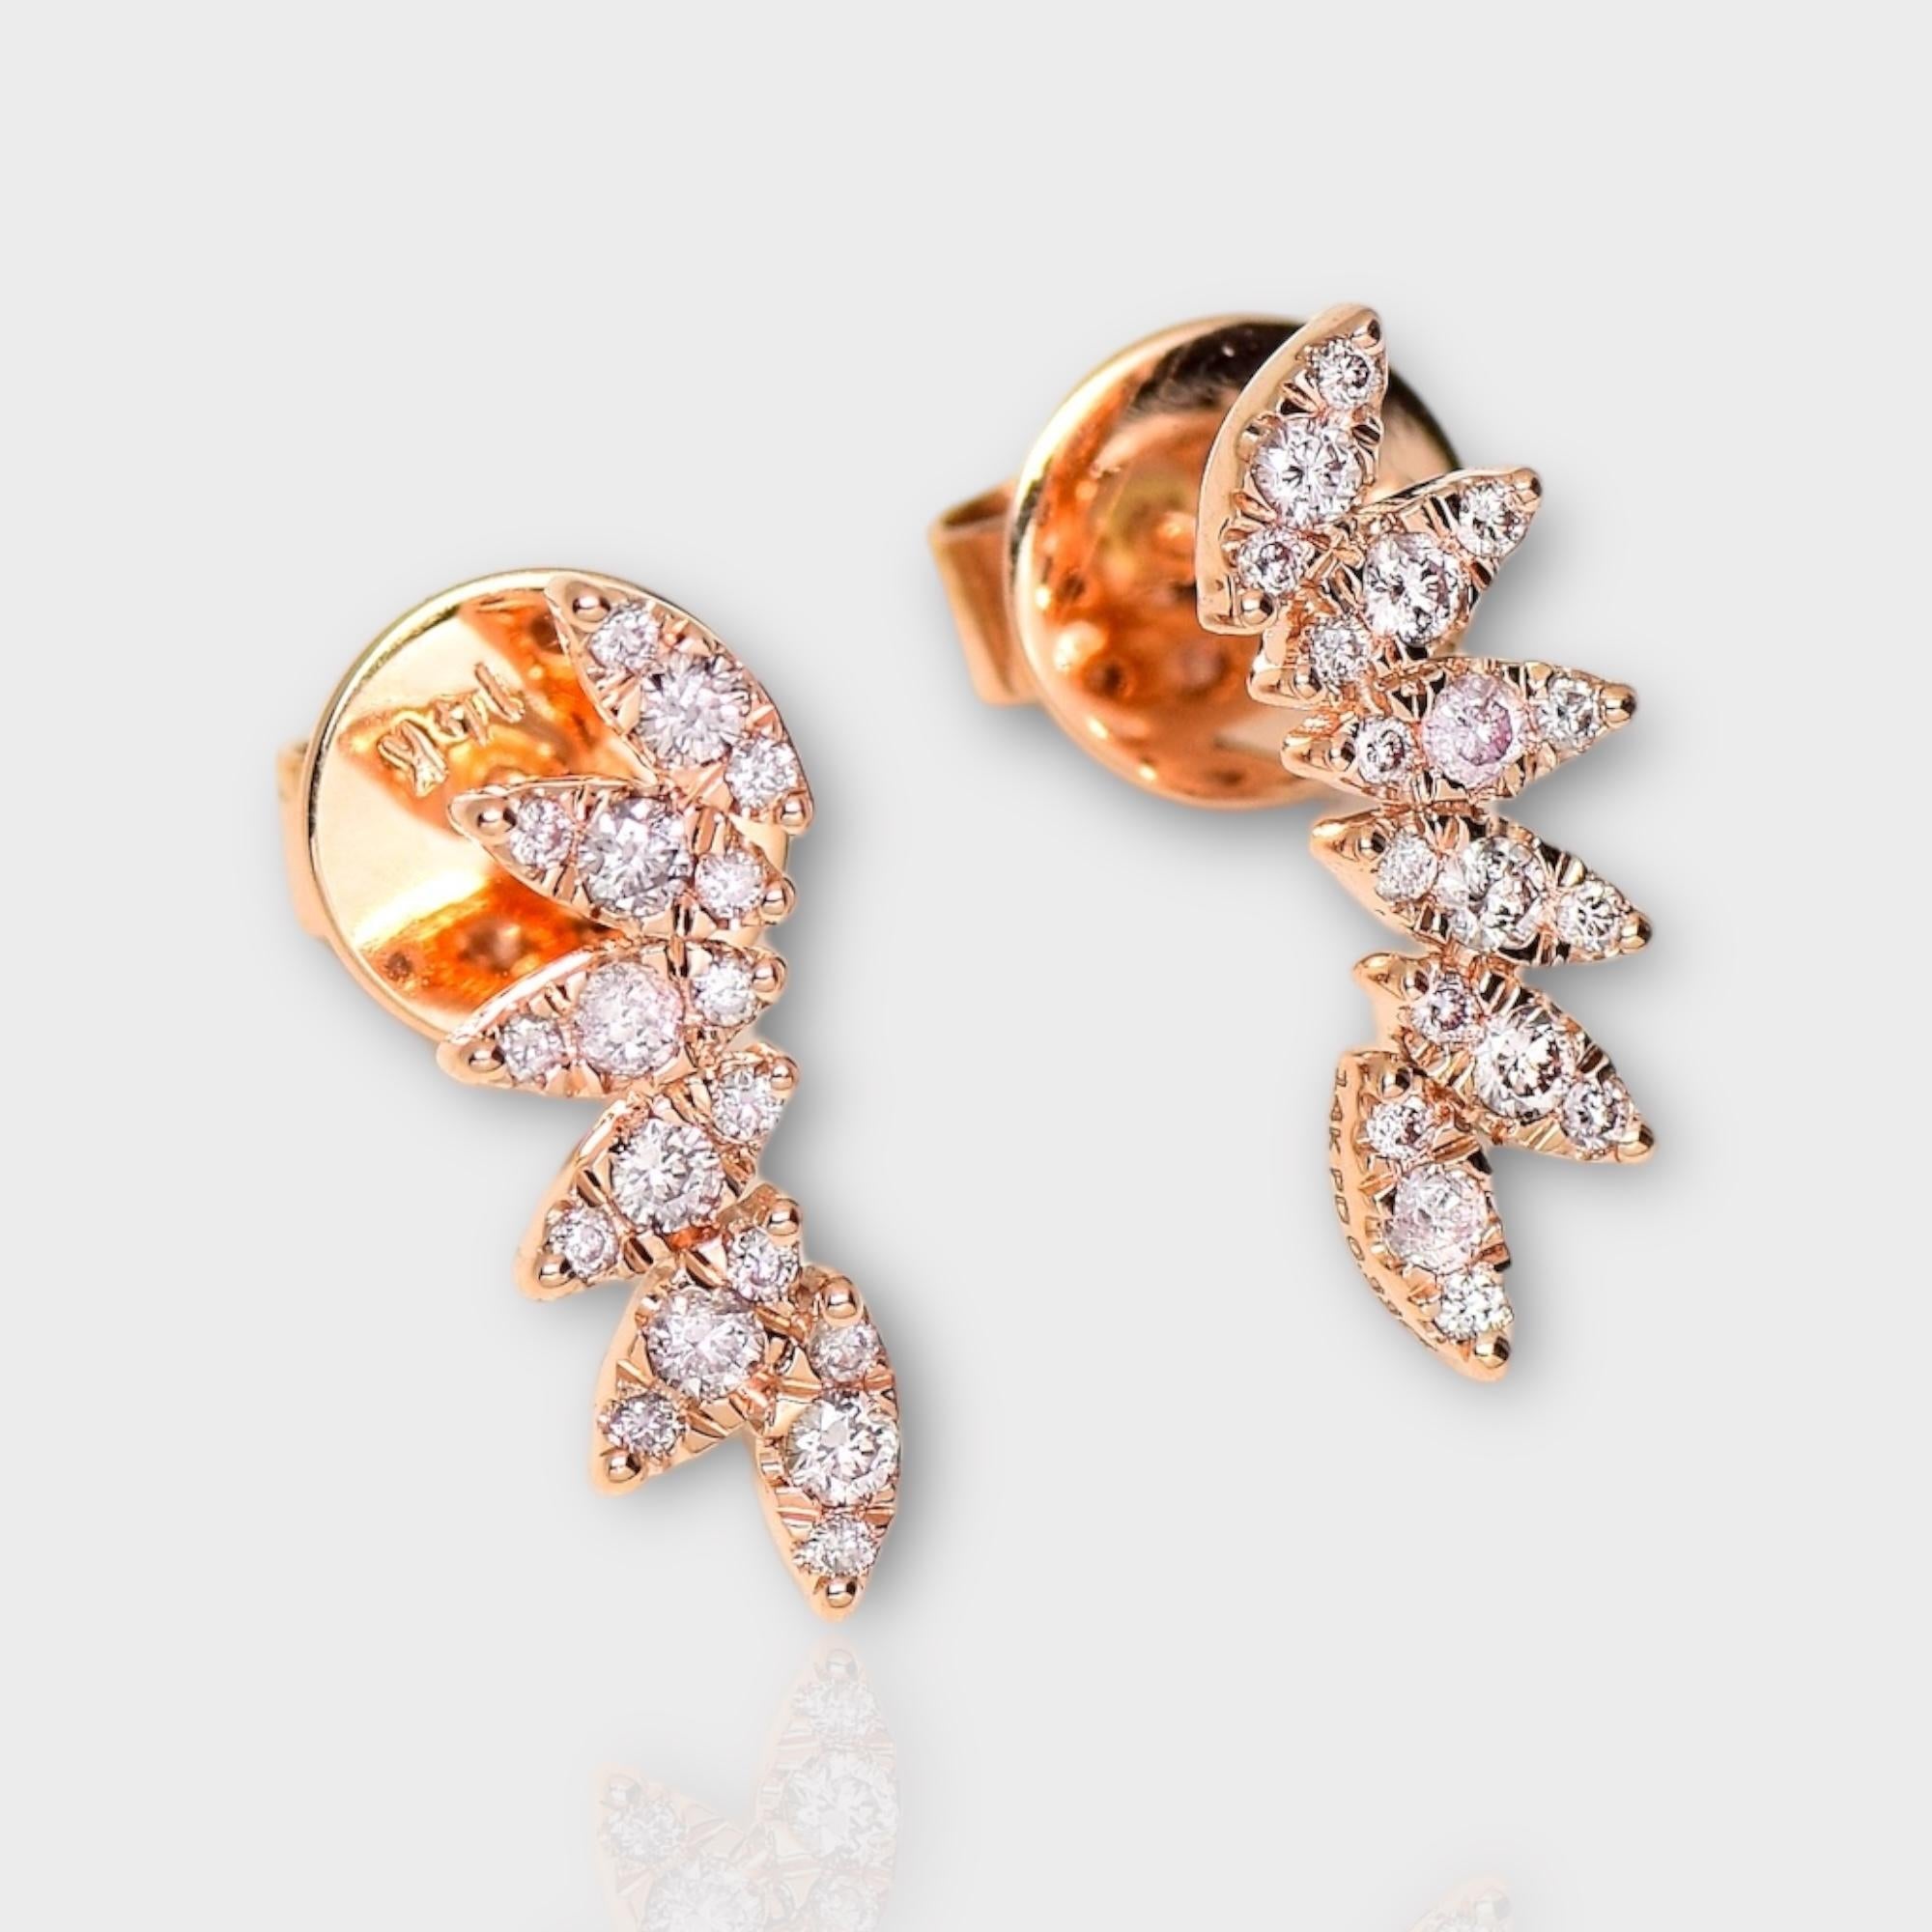 Contemporary IGI 14K 0.33 ct Natural Pink Diamonds Art Deco Design Stud Earrings For Sale